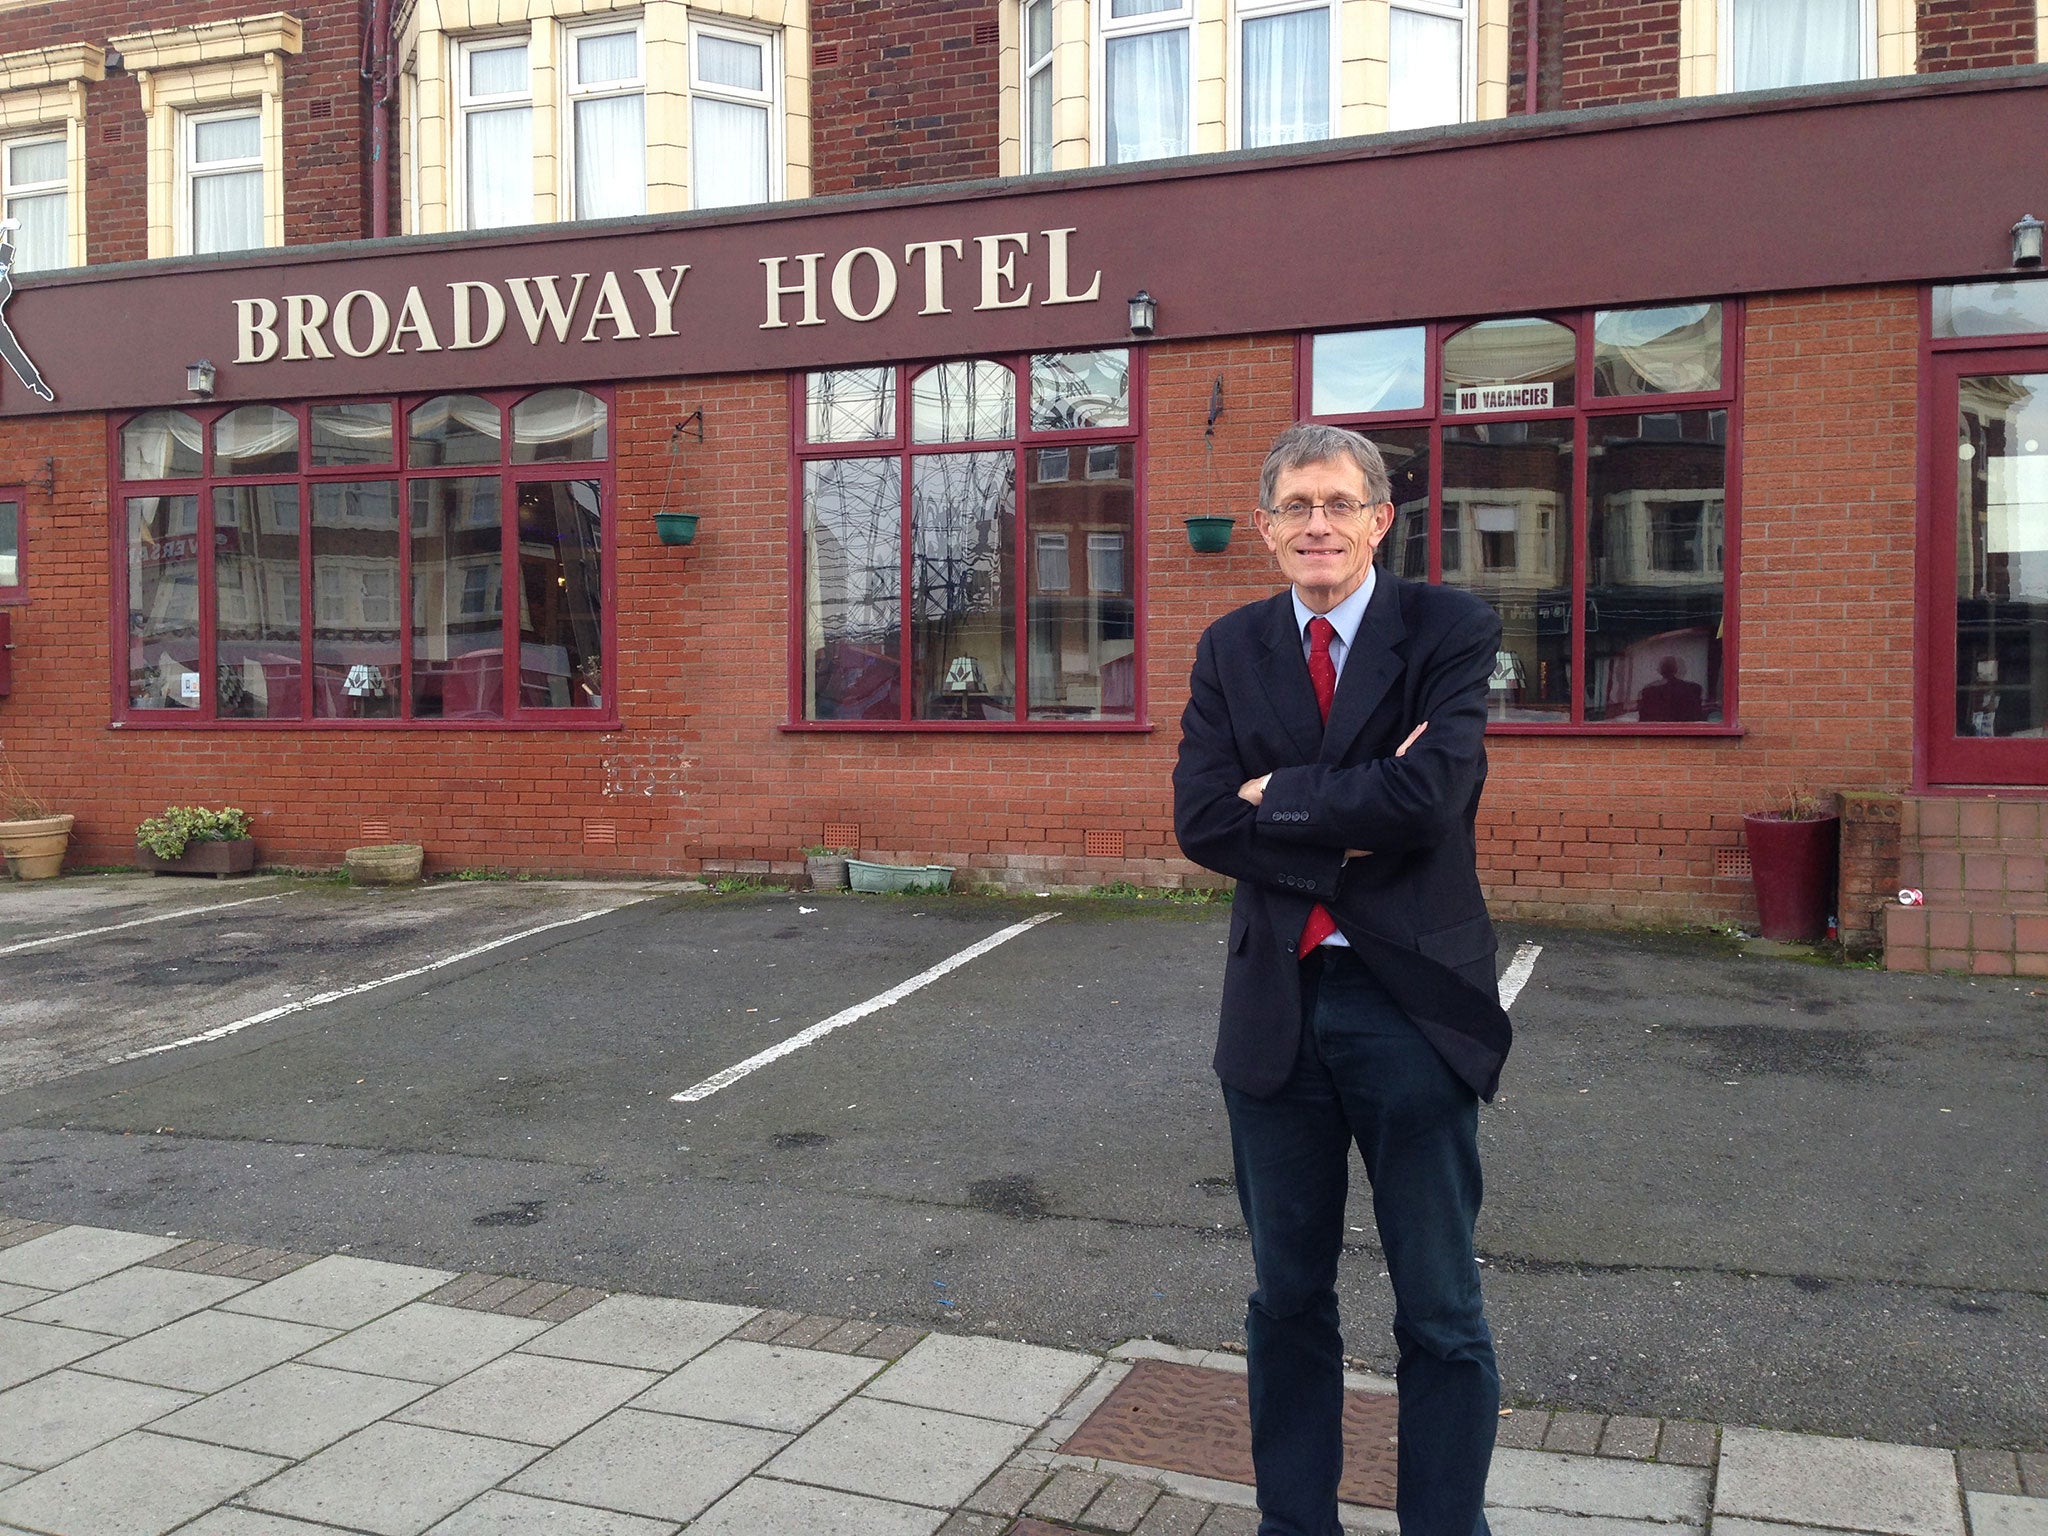 Simon Calder checks in to the Broadway Hotel